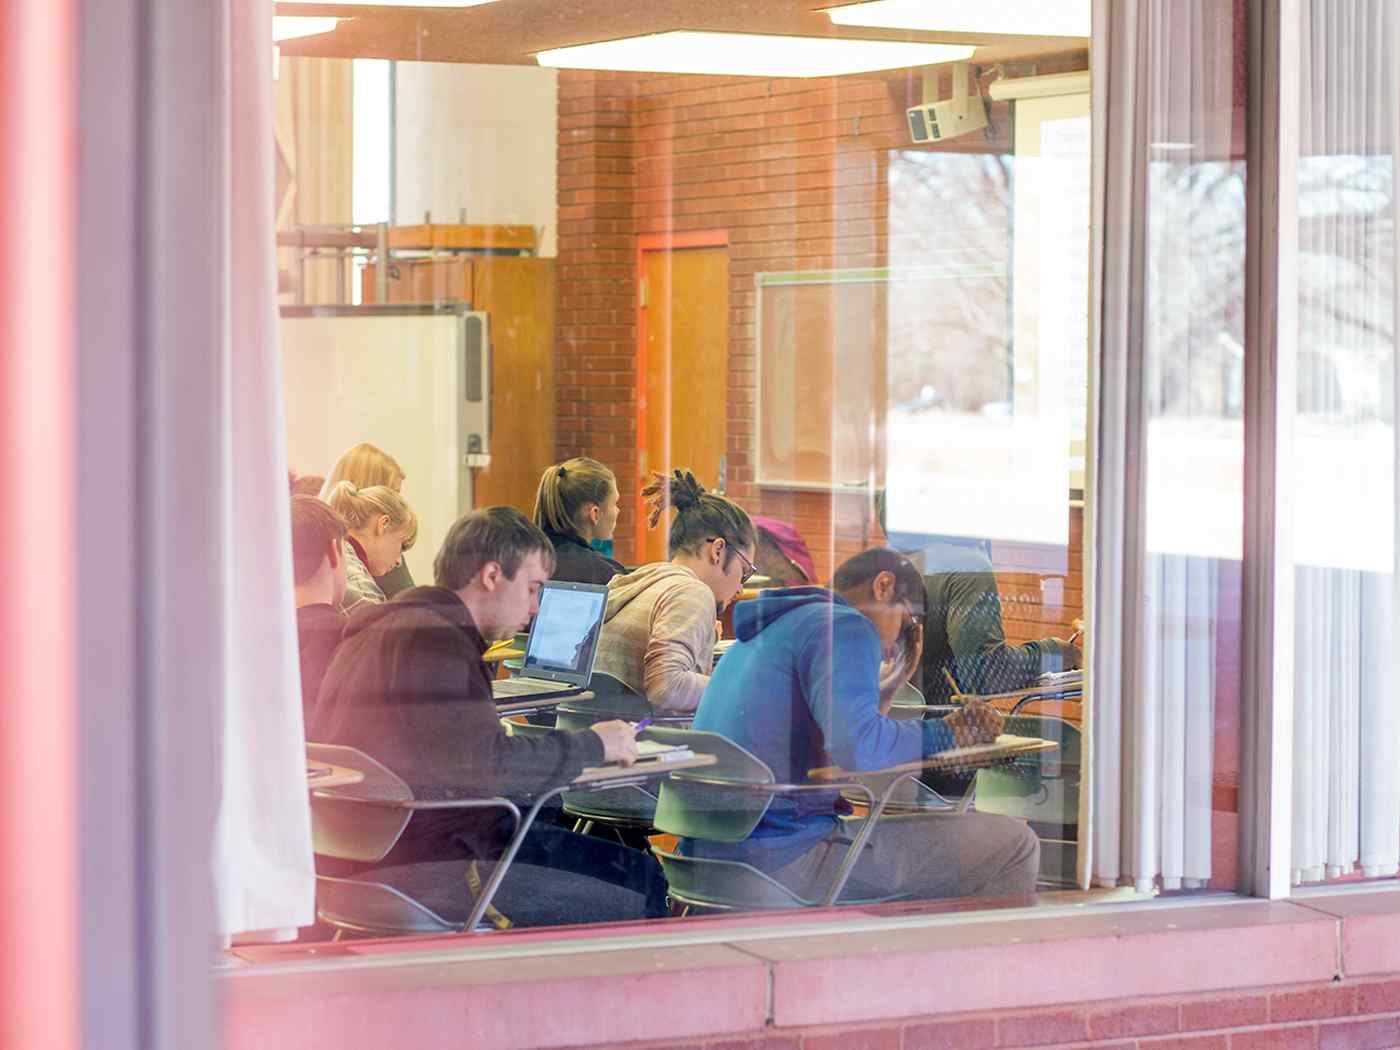 Students in a Corbin Education Center classroom